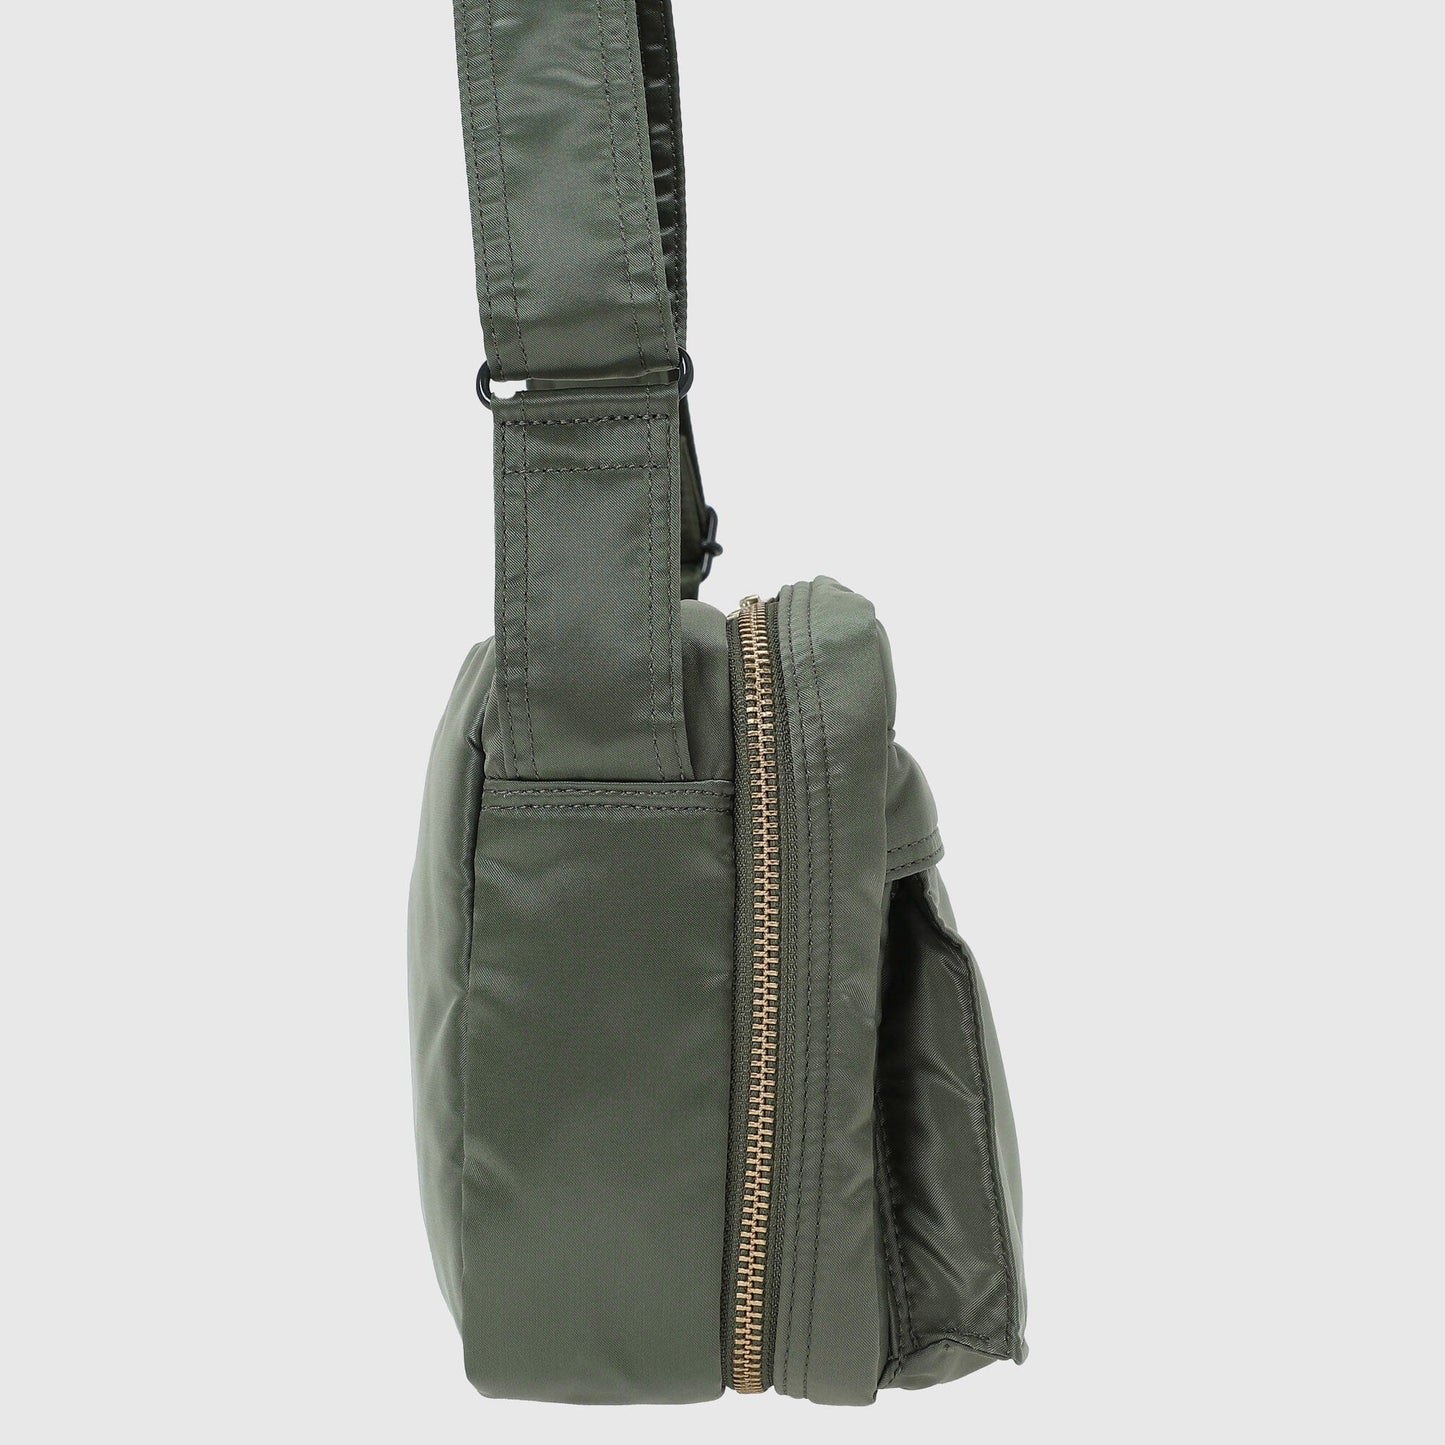 Porter-Yoshida & Co. Tanker Shoulder Bag Small - Sage Green Bag Porter-Yoshida & Co. 